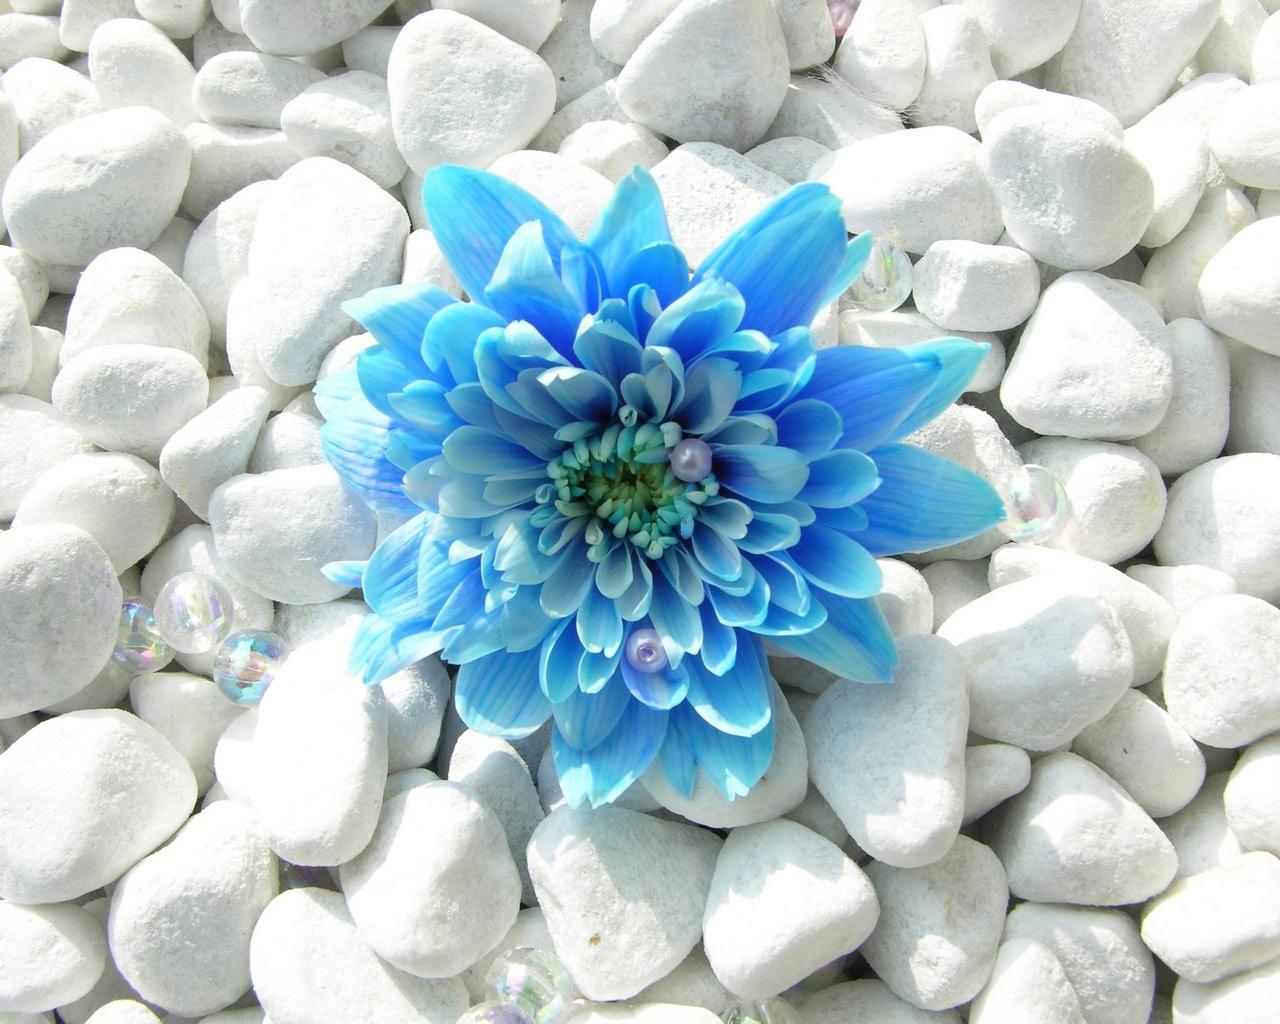 Blue Flower Wallpaper in jpg format for free download